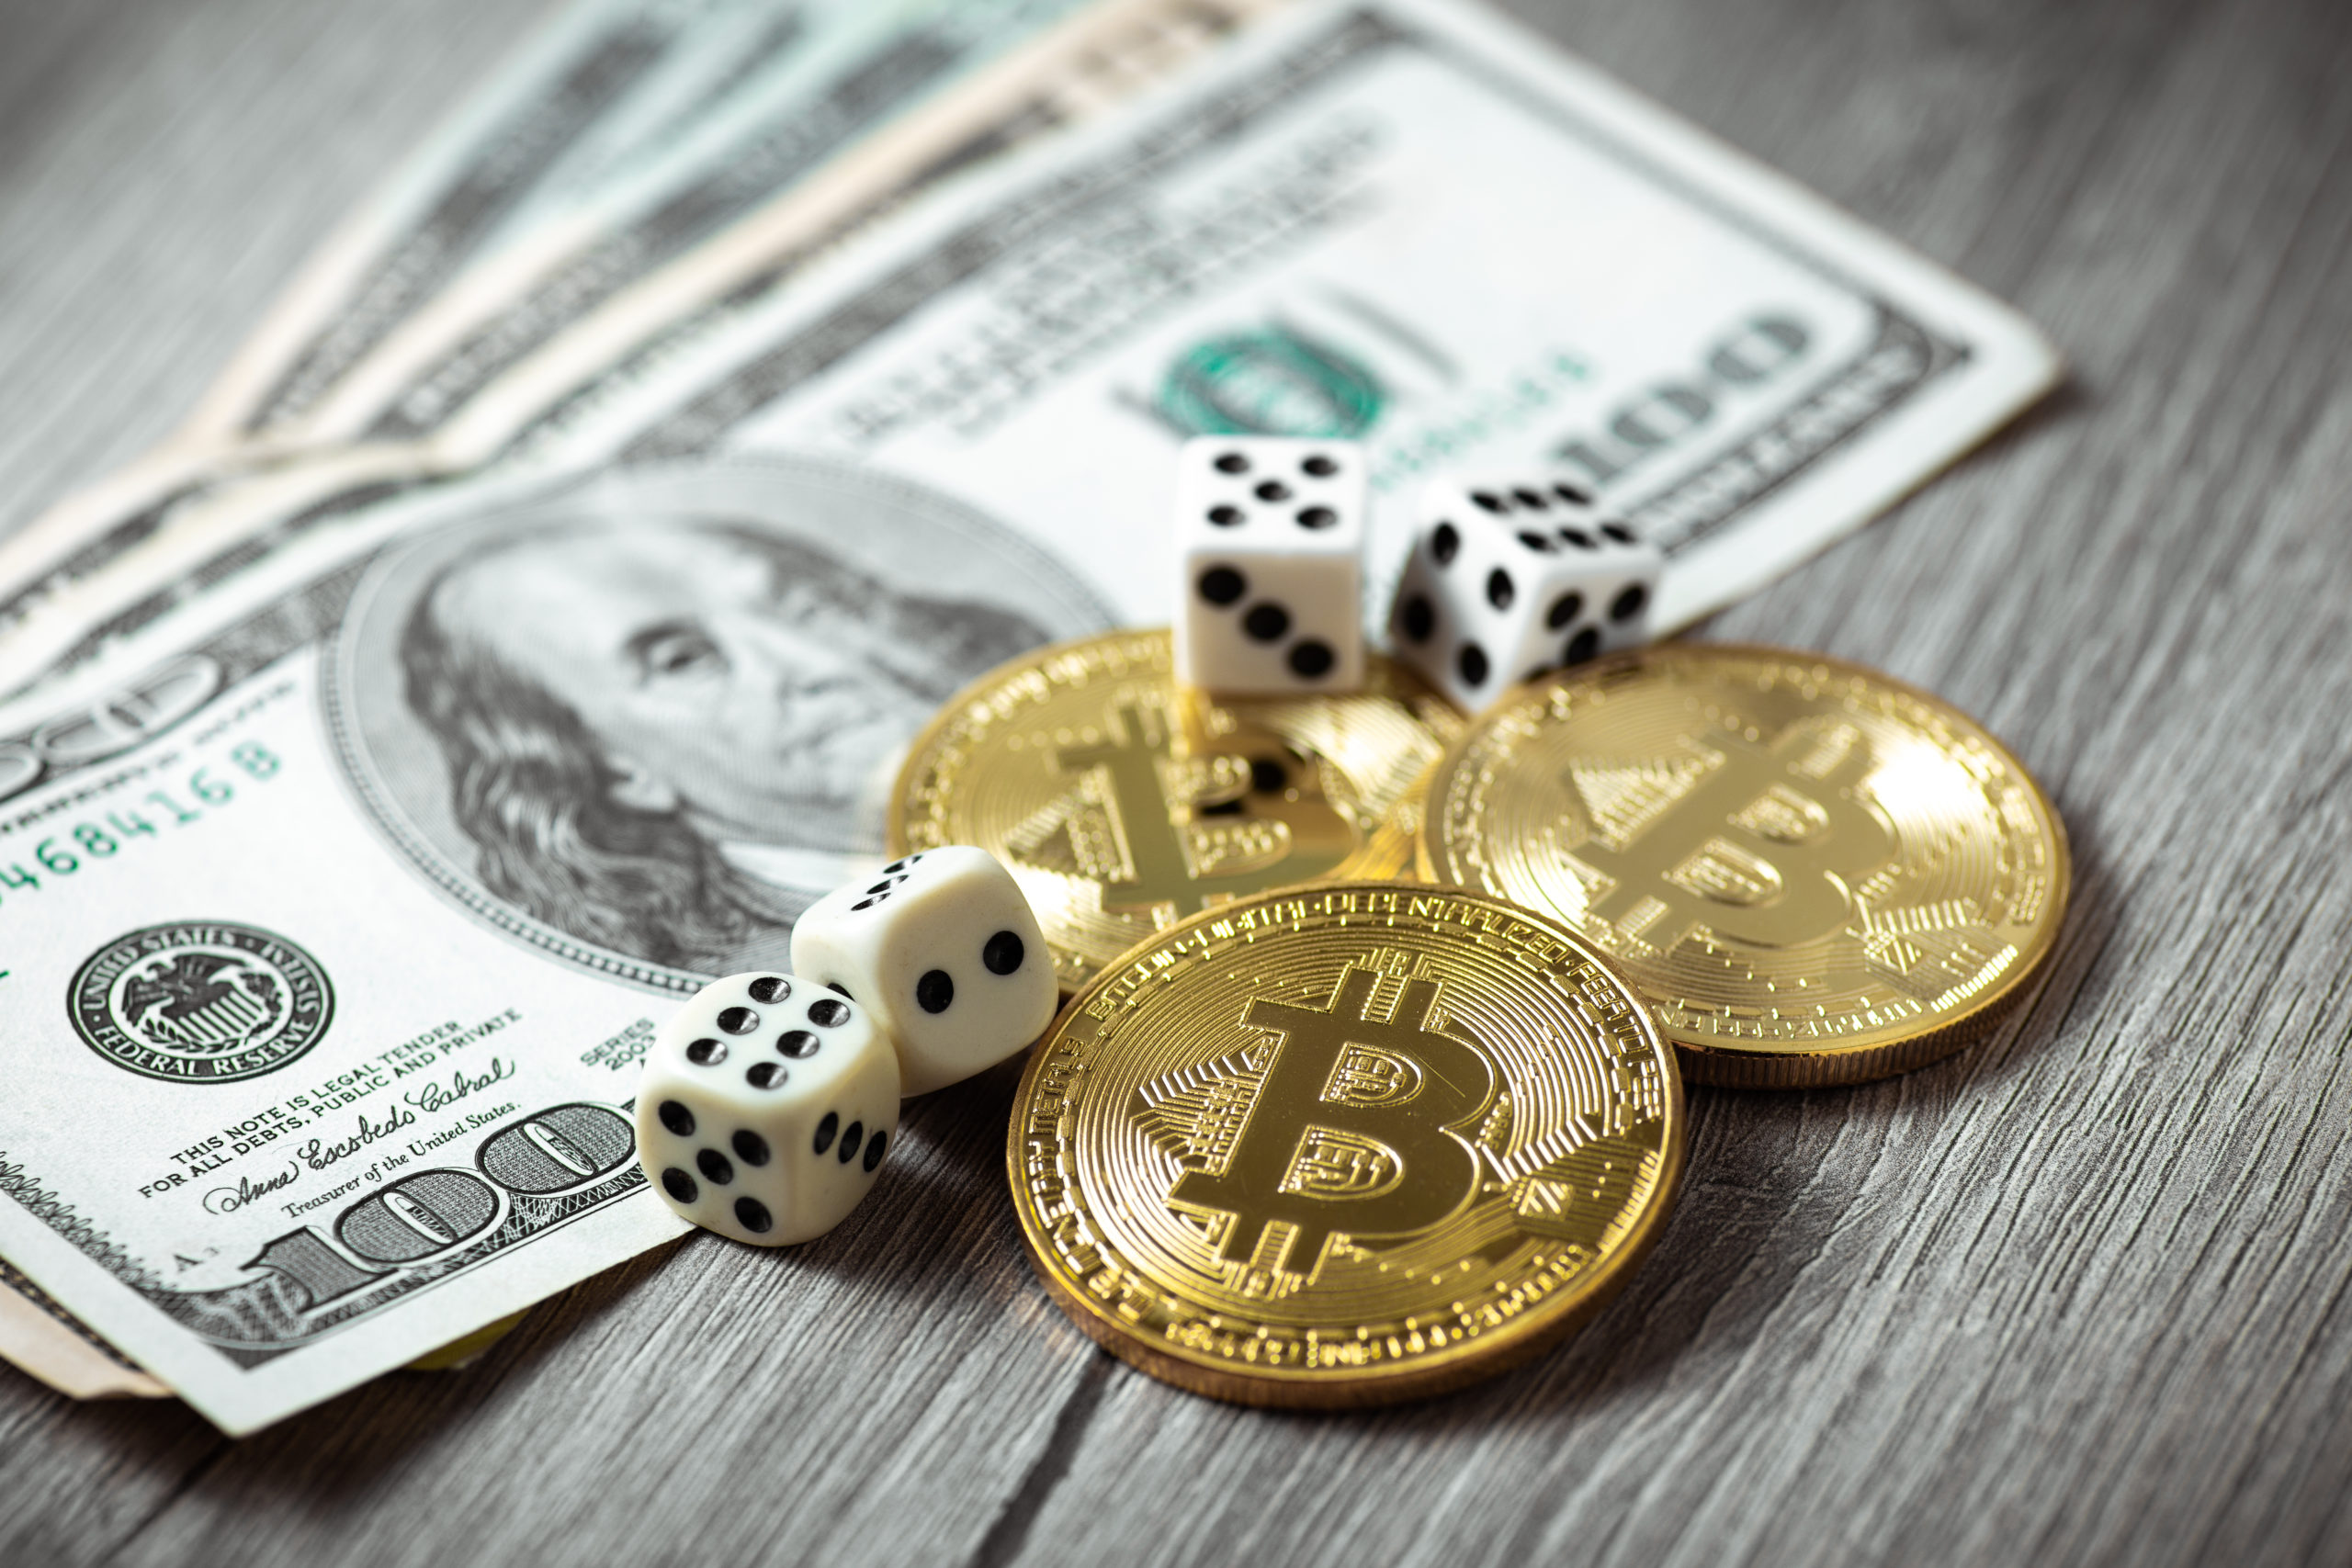 Fascinating bitcoin casinos Tactics That Can Help Your Business Grow